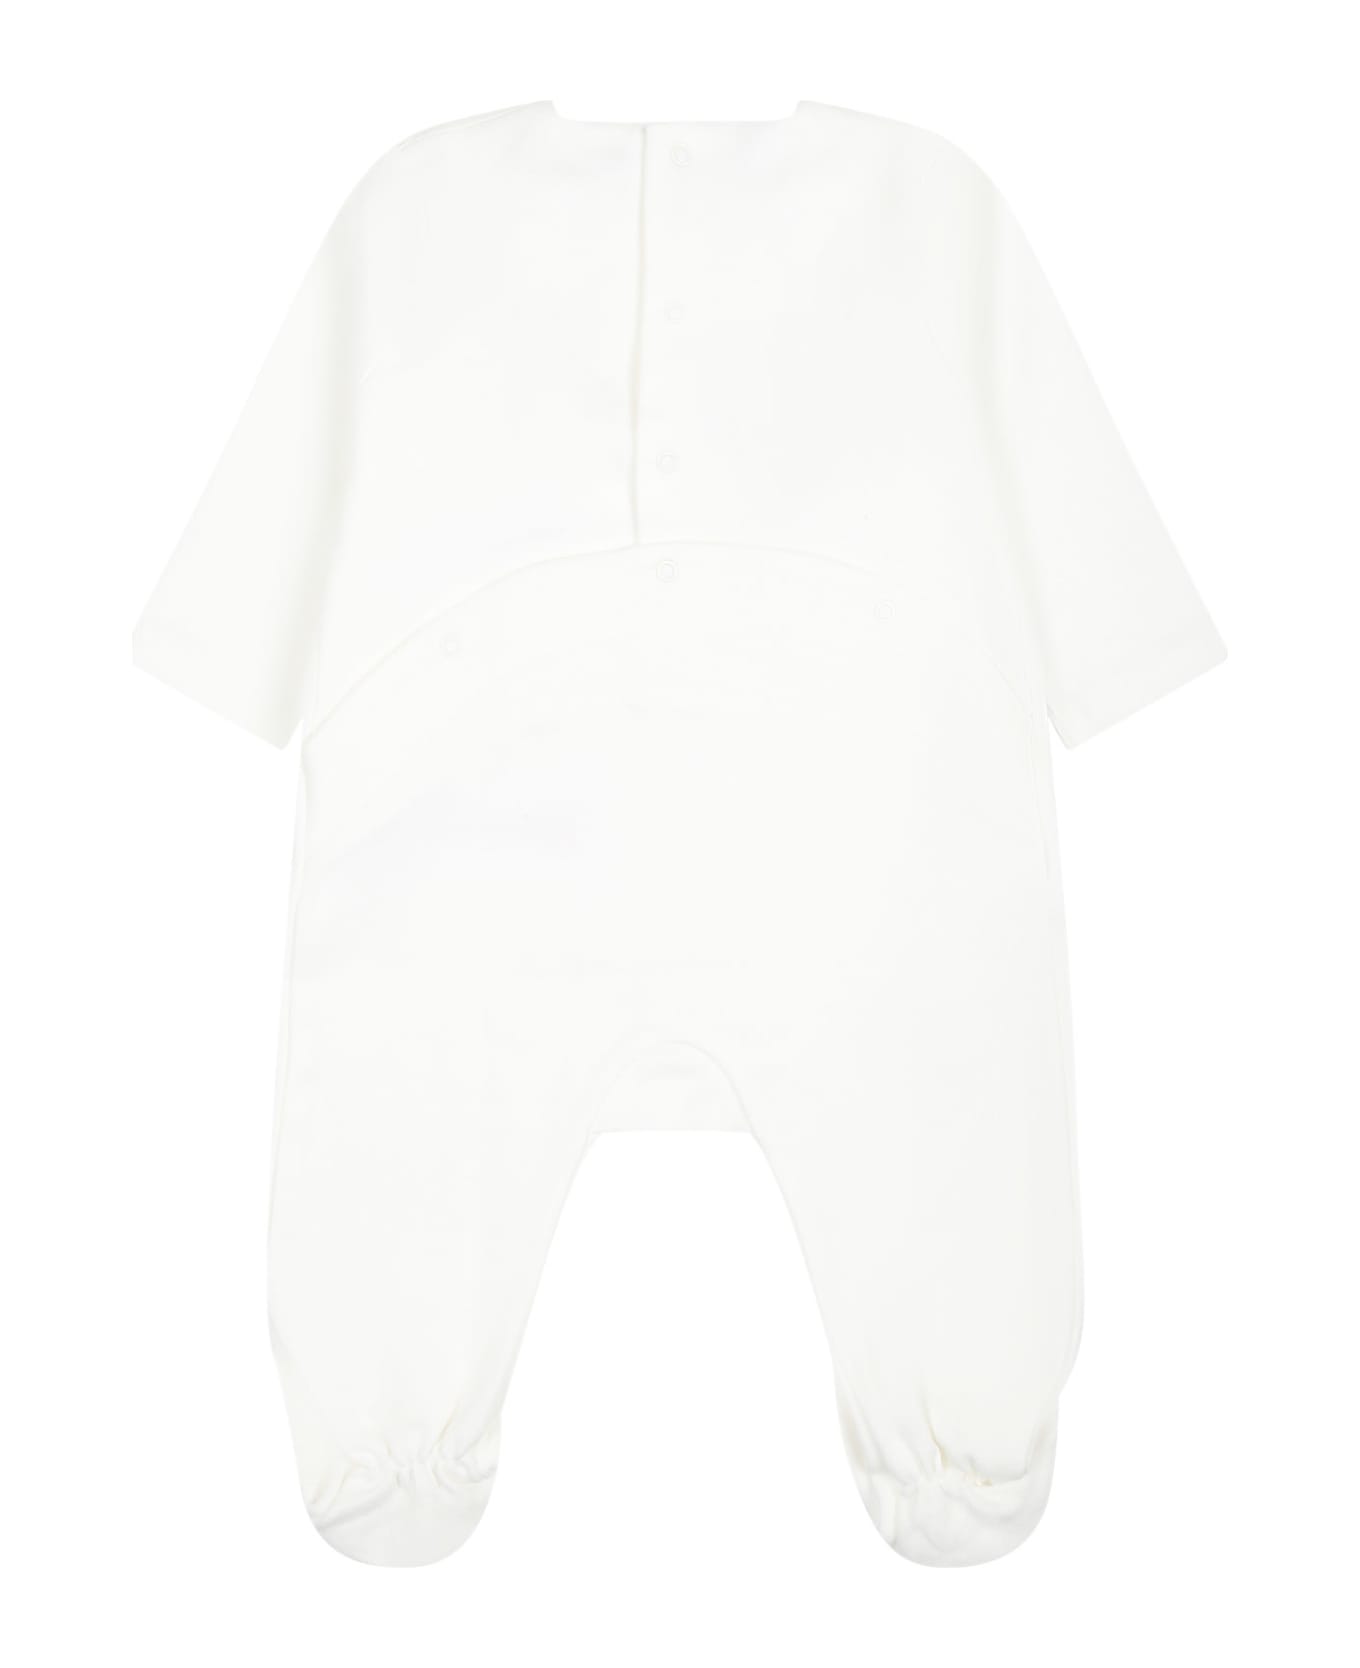 Chloé White Set For Baby Girl With Logo - White